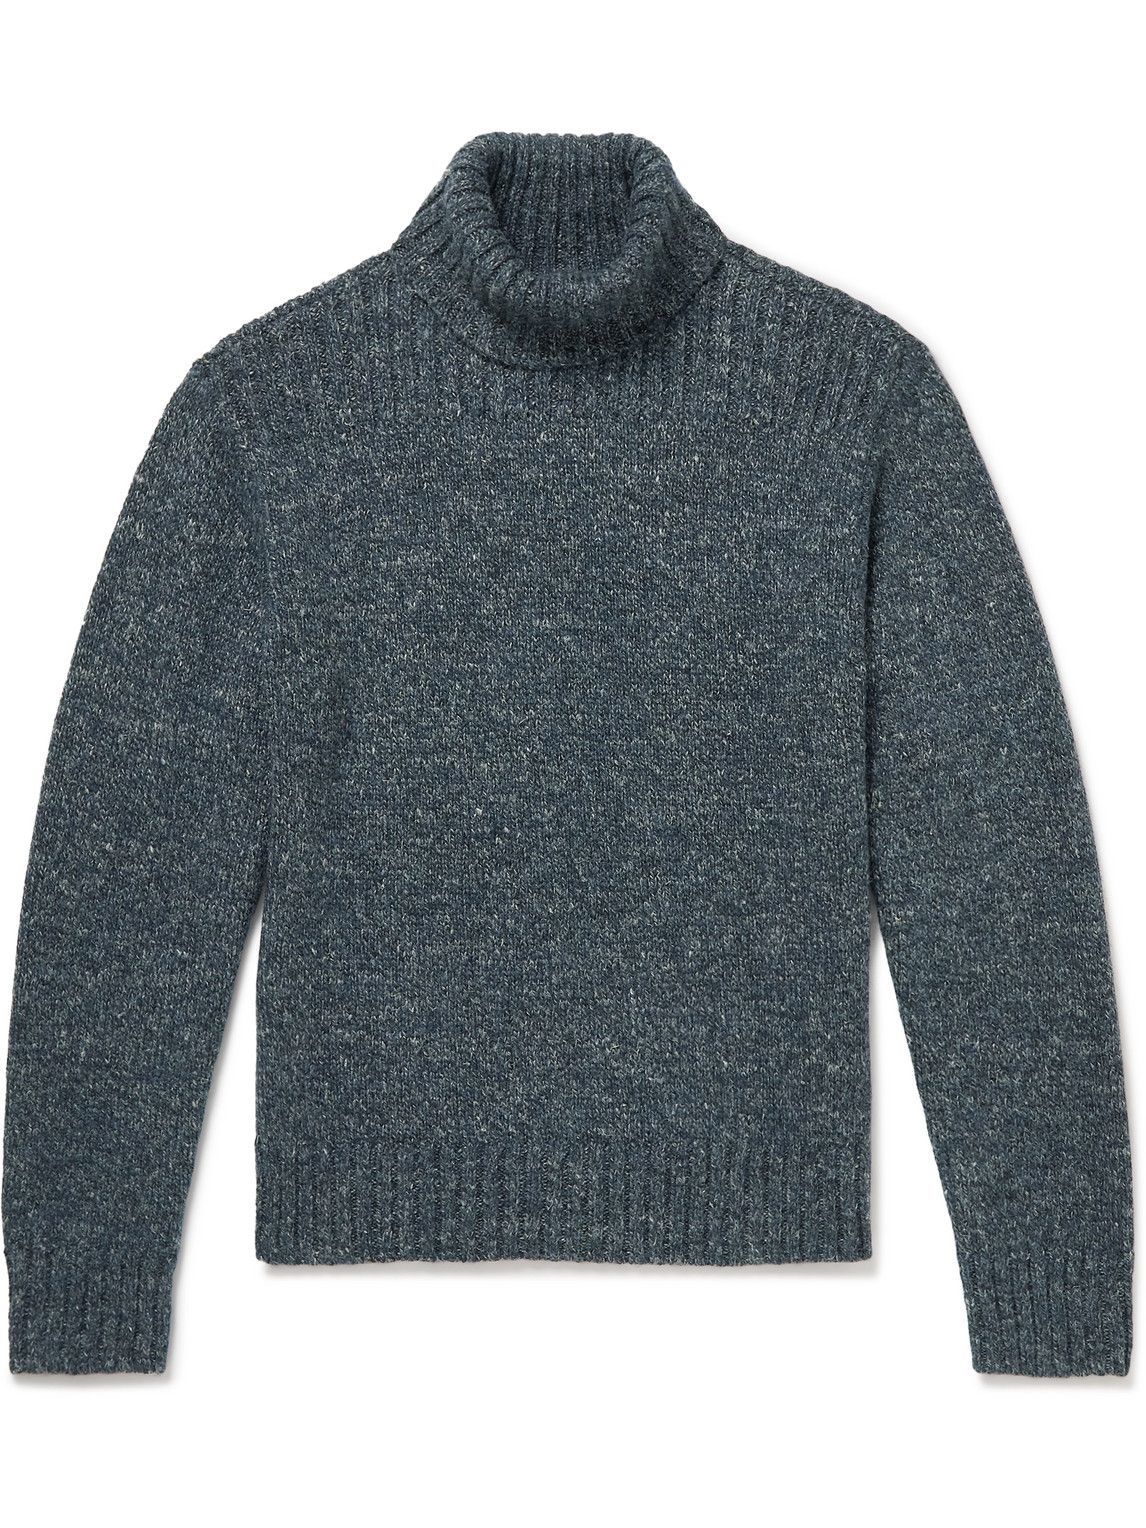 RRL - Wool, Cotton and Linen-Blend Rollneck Sweater - Blue RRL